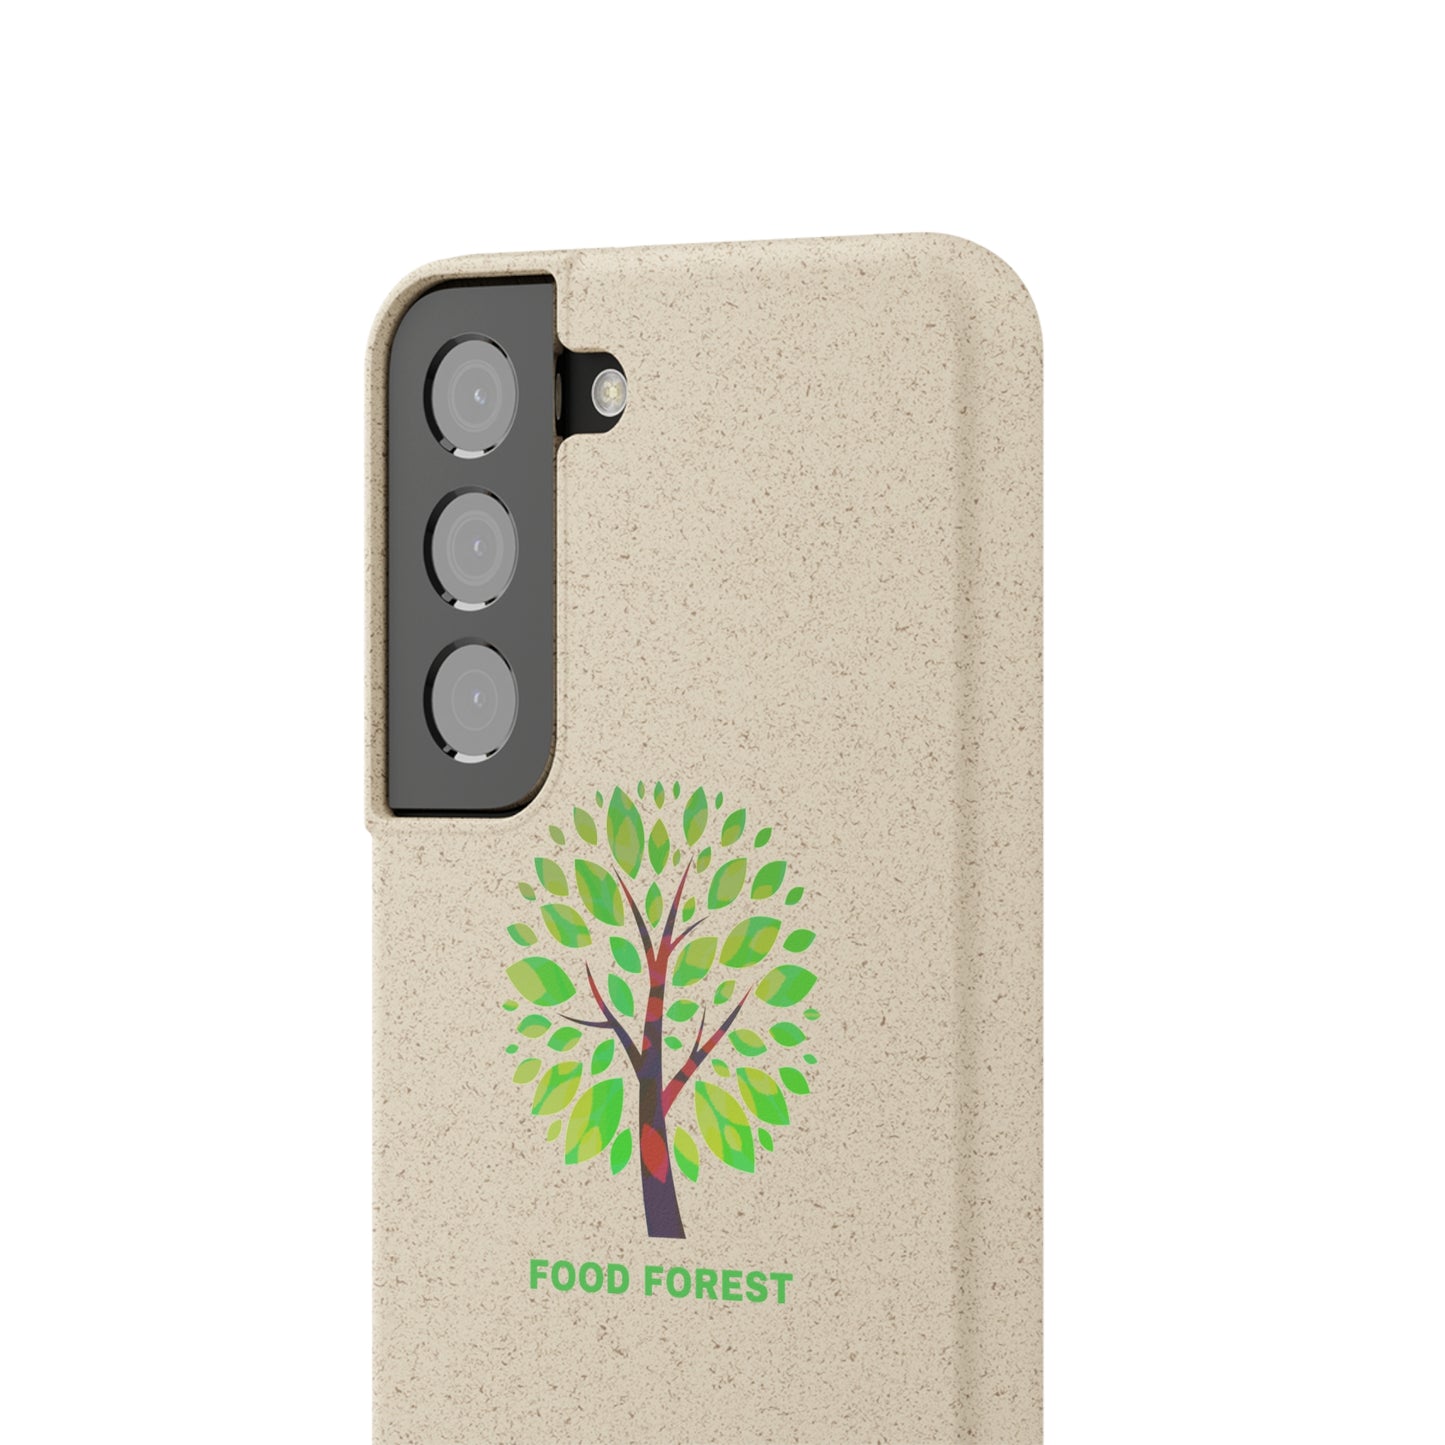 Biodegradable Samsung Cases, FOOD FOREST